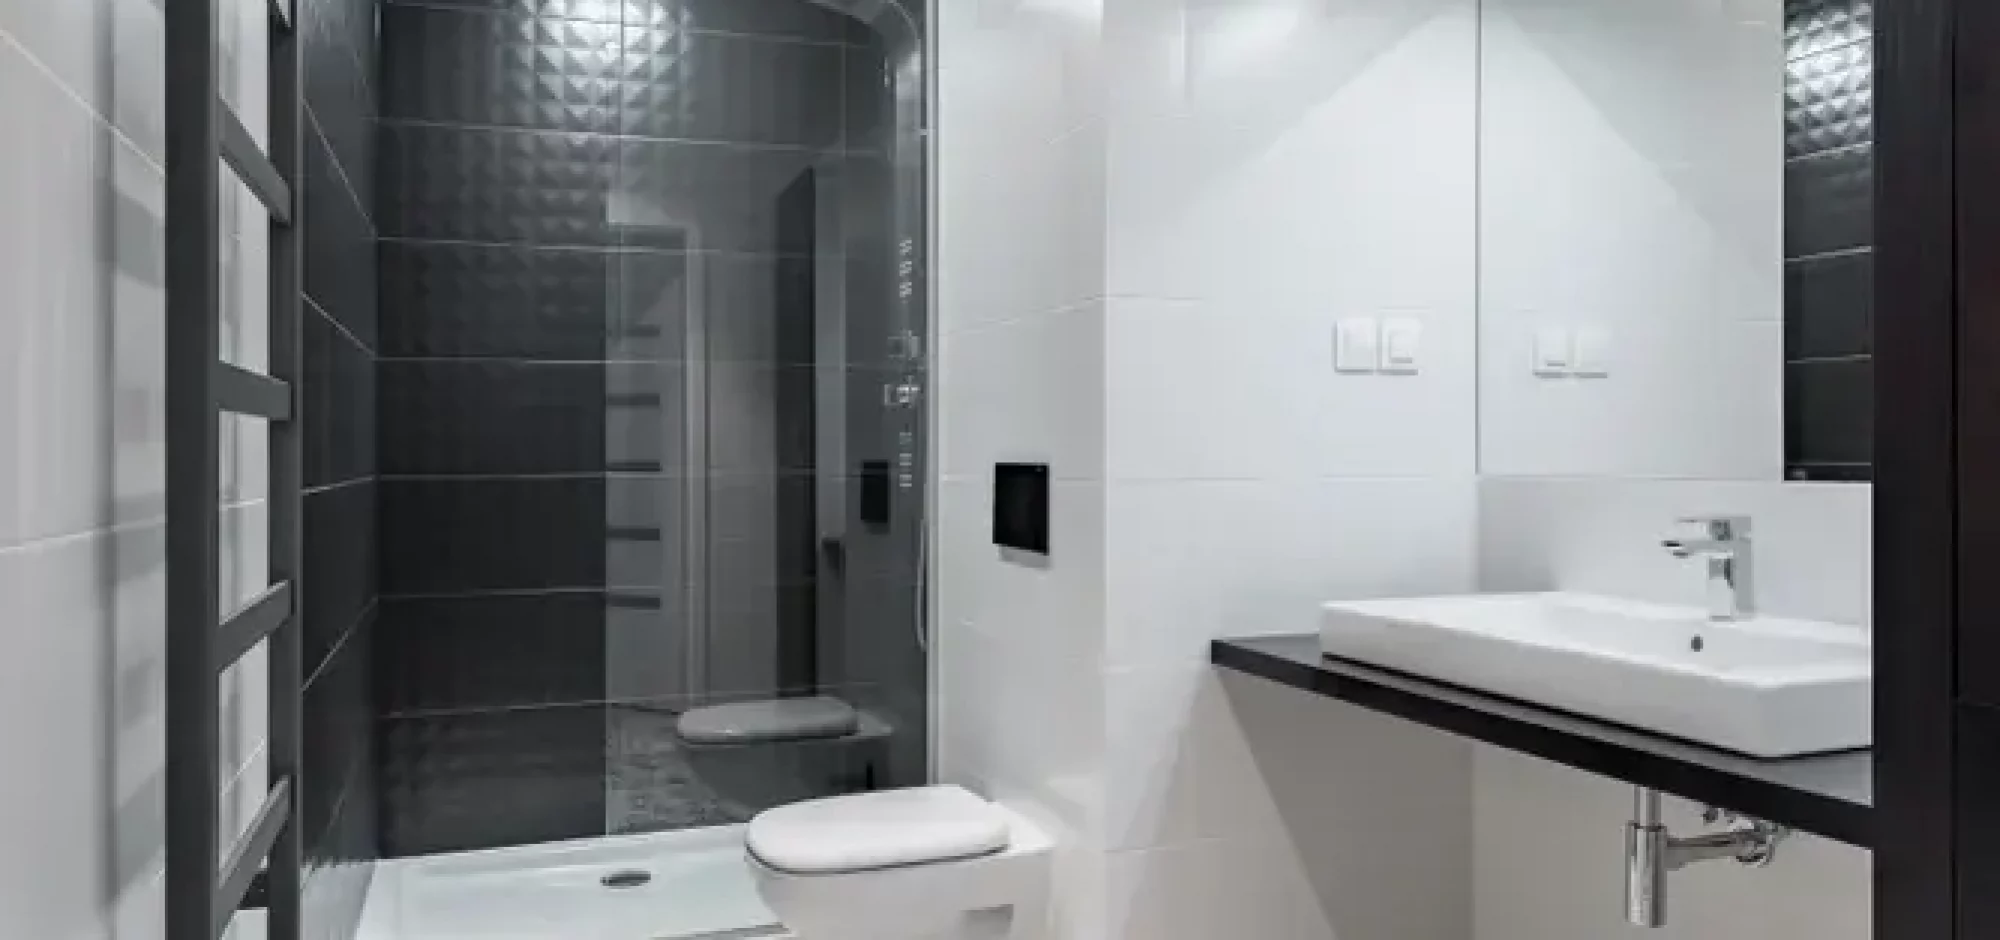 White Square Tile Bathroom 1